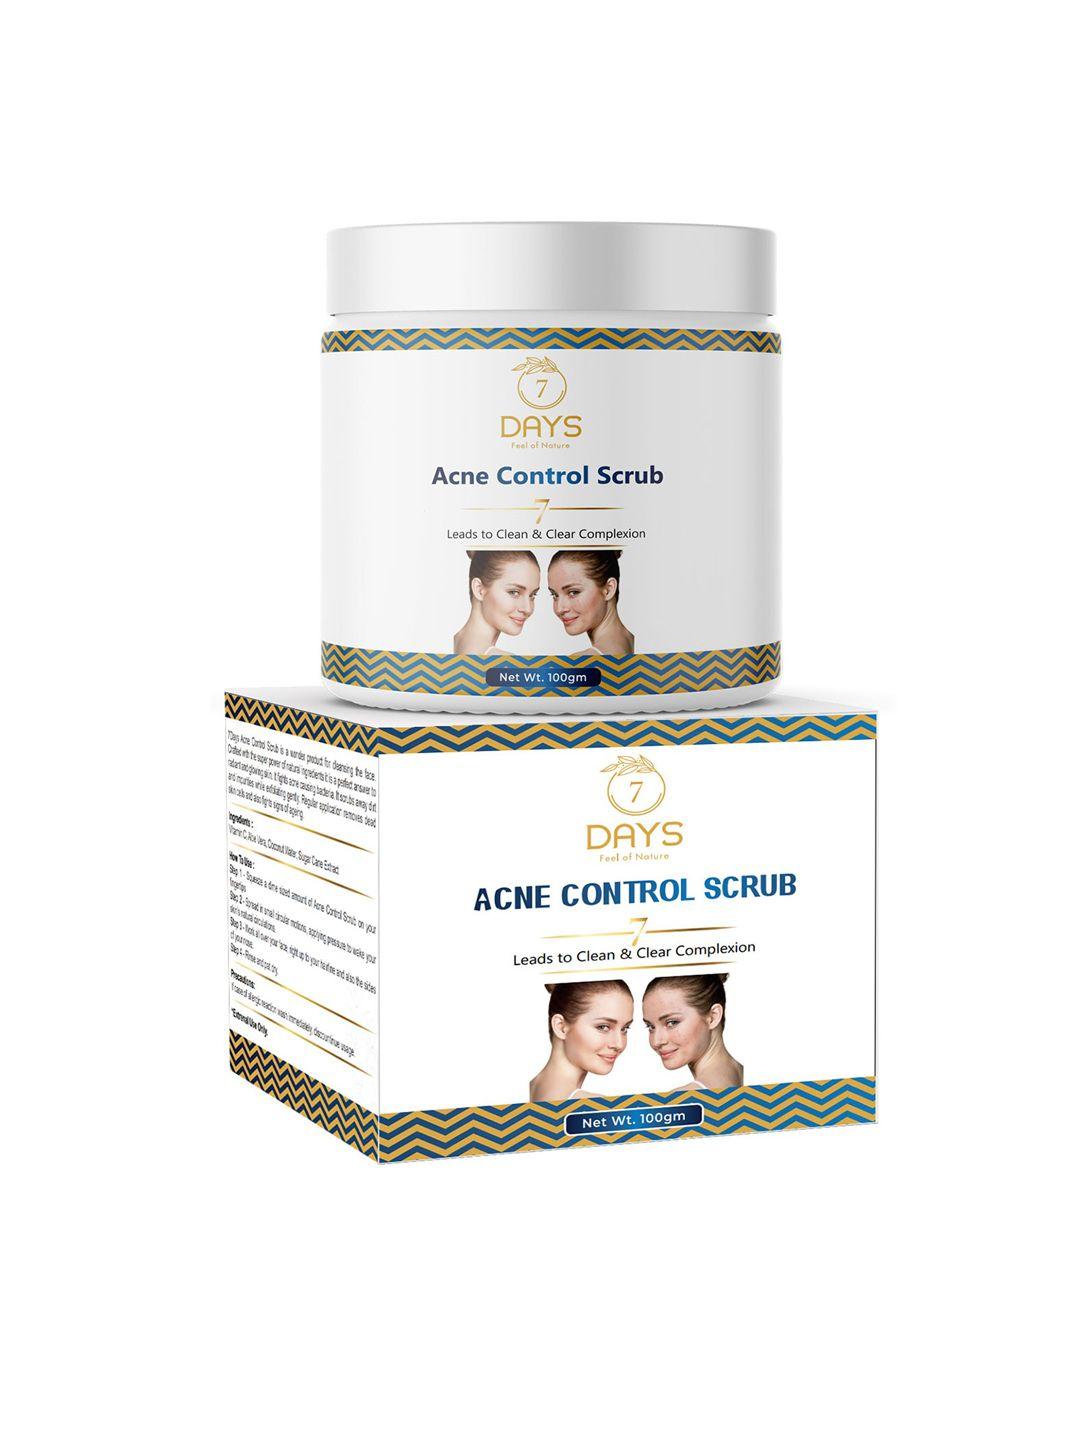 7 days acne control face scrub for clean & clear complexion - 100 g